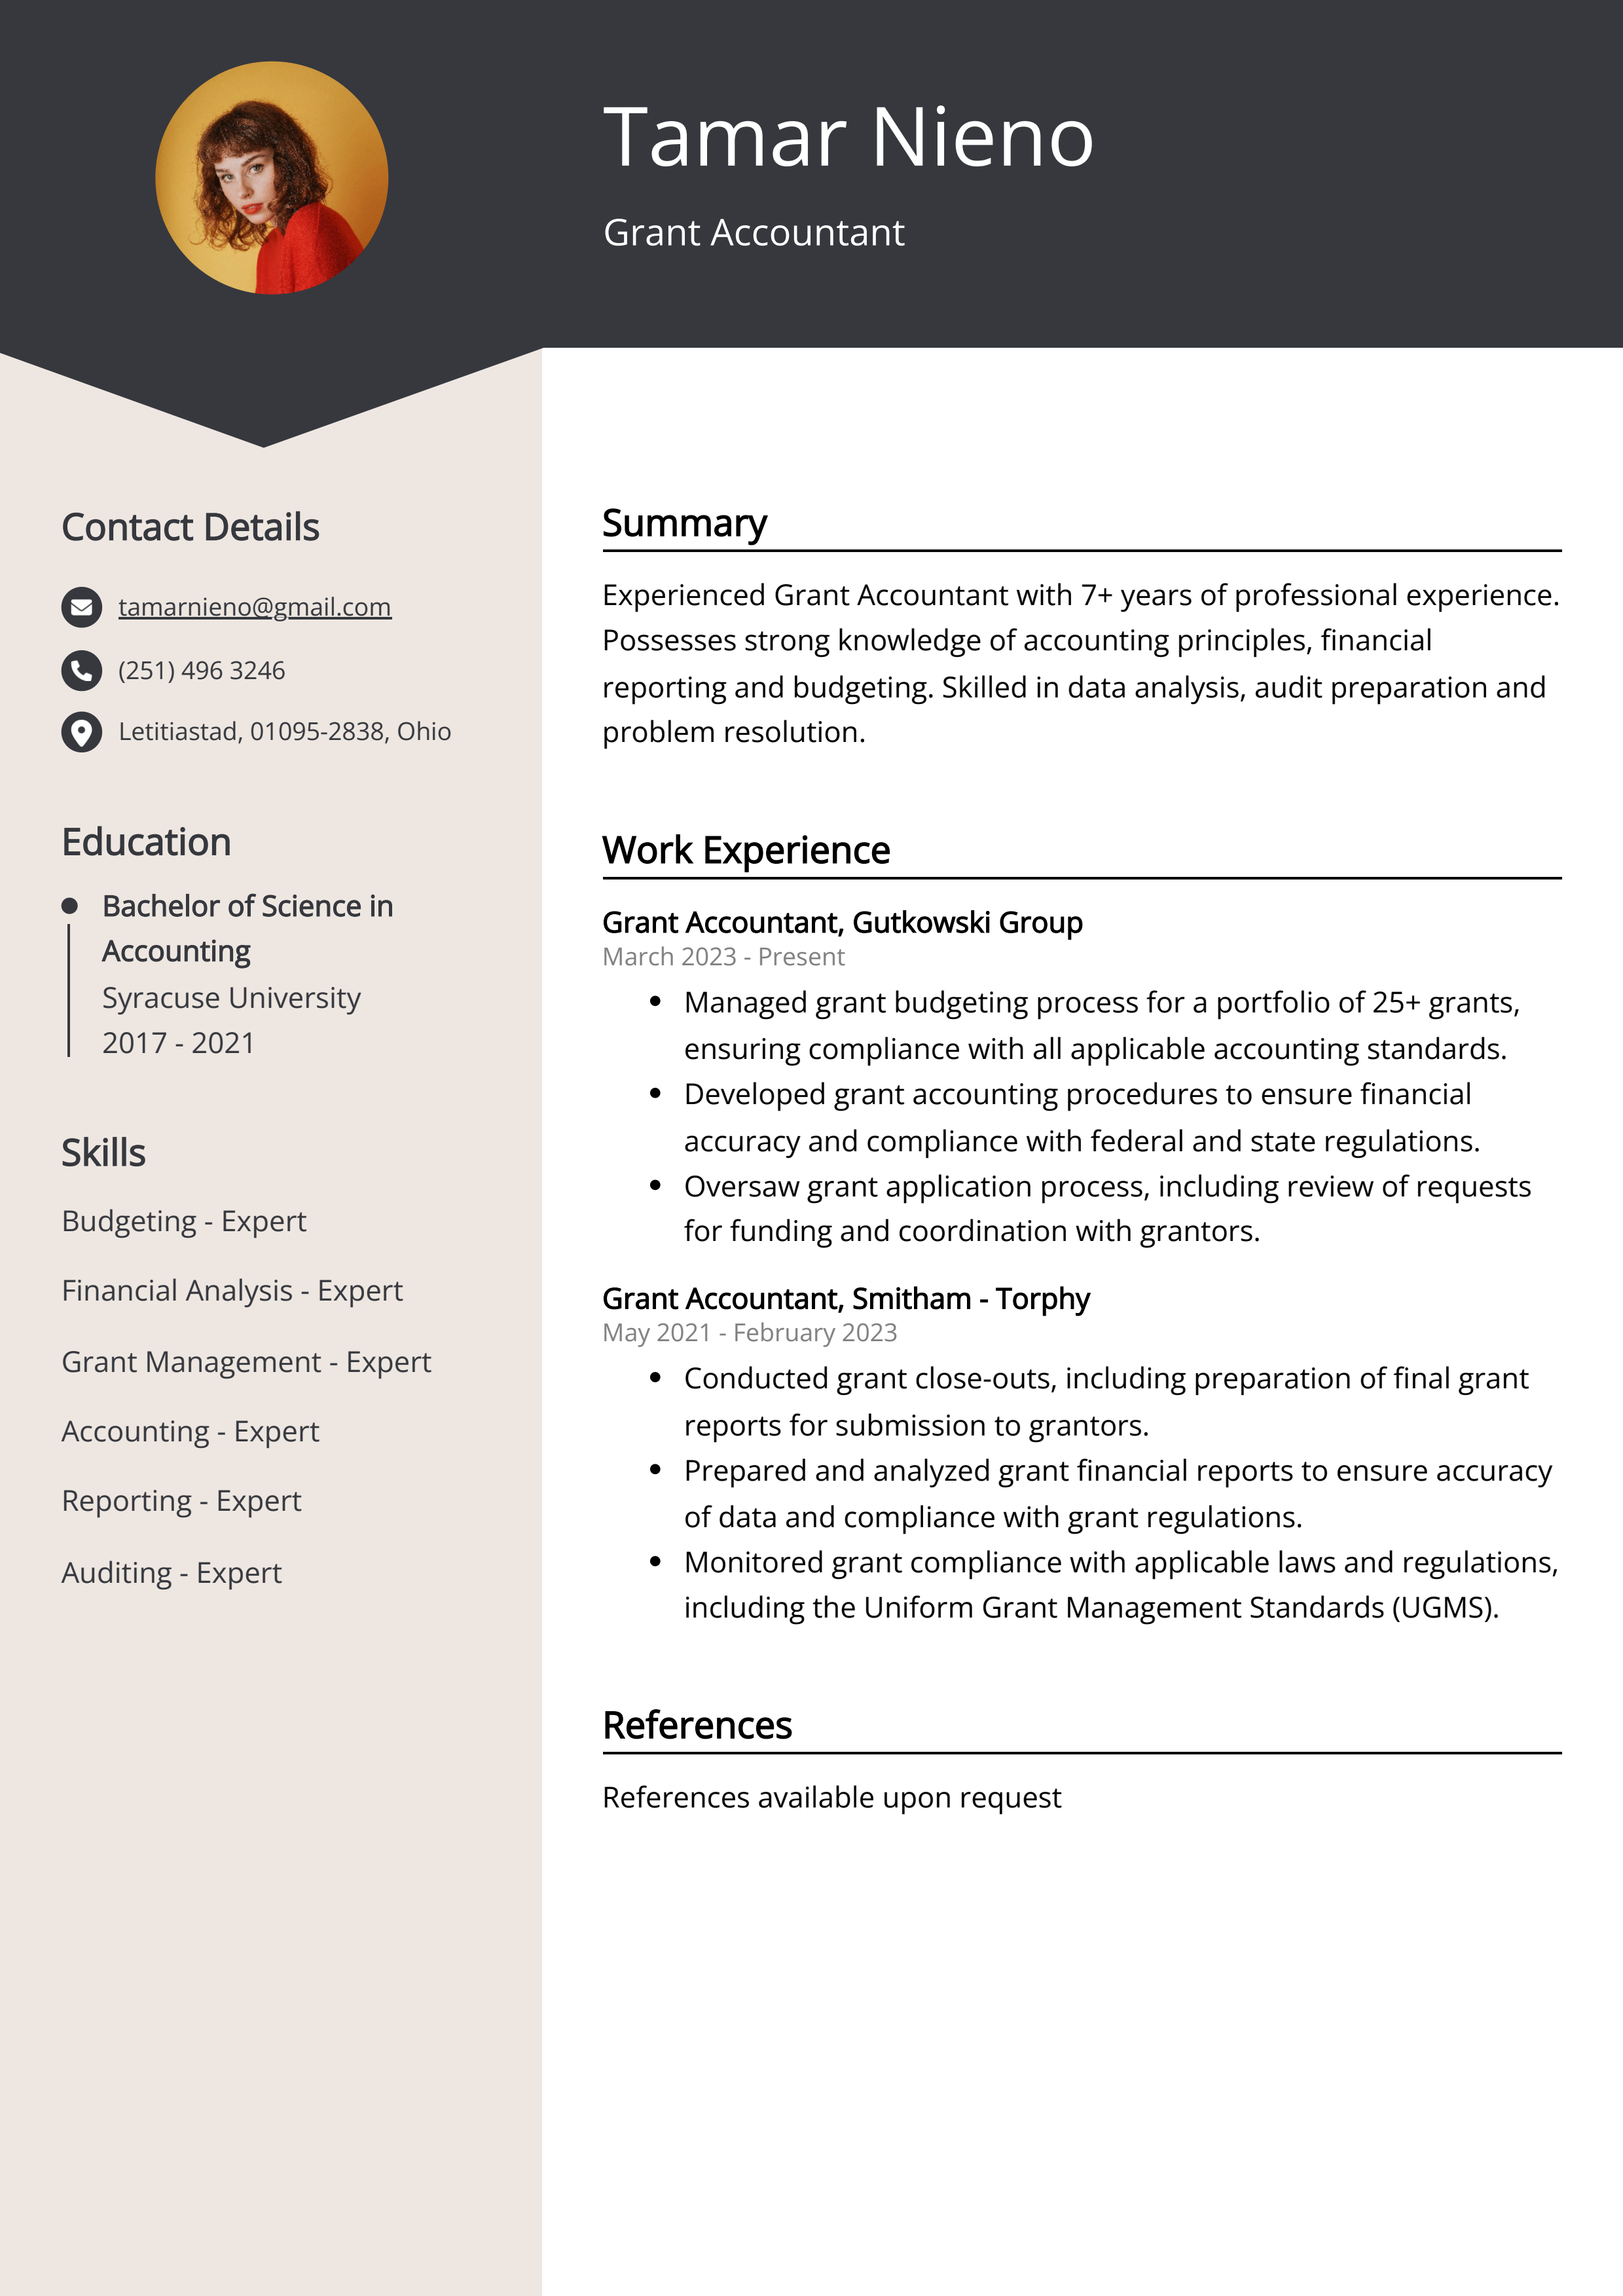 Grant Accountant CV Example